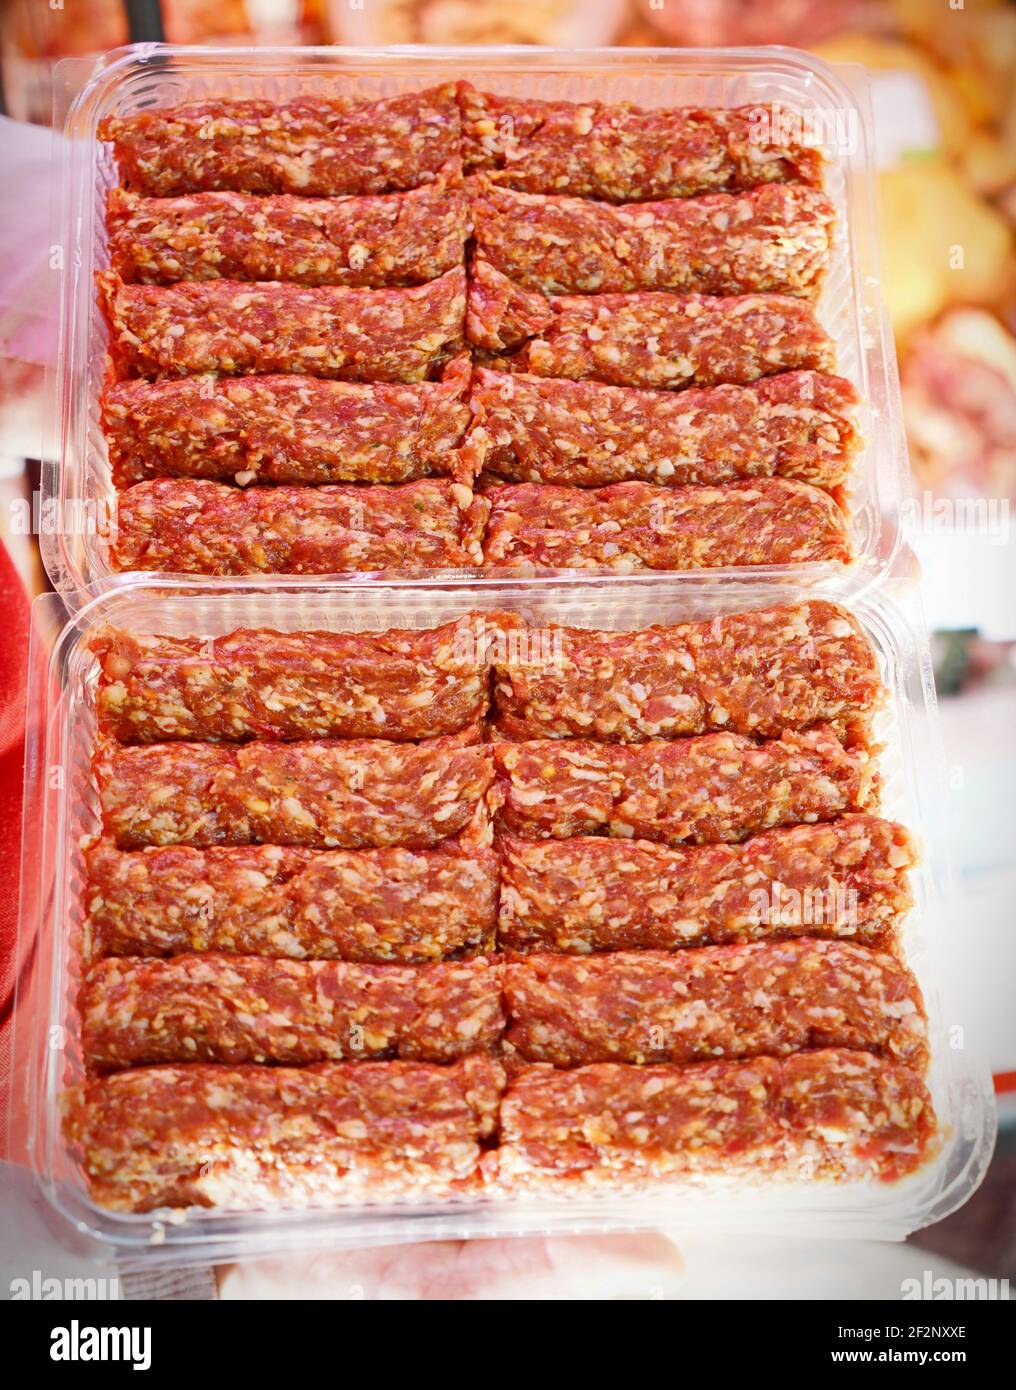 Rollitos de carne rumanos crudos llamados mititei, mici - primeros planos. Comida tradicional rumana Foto de stock